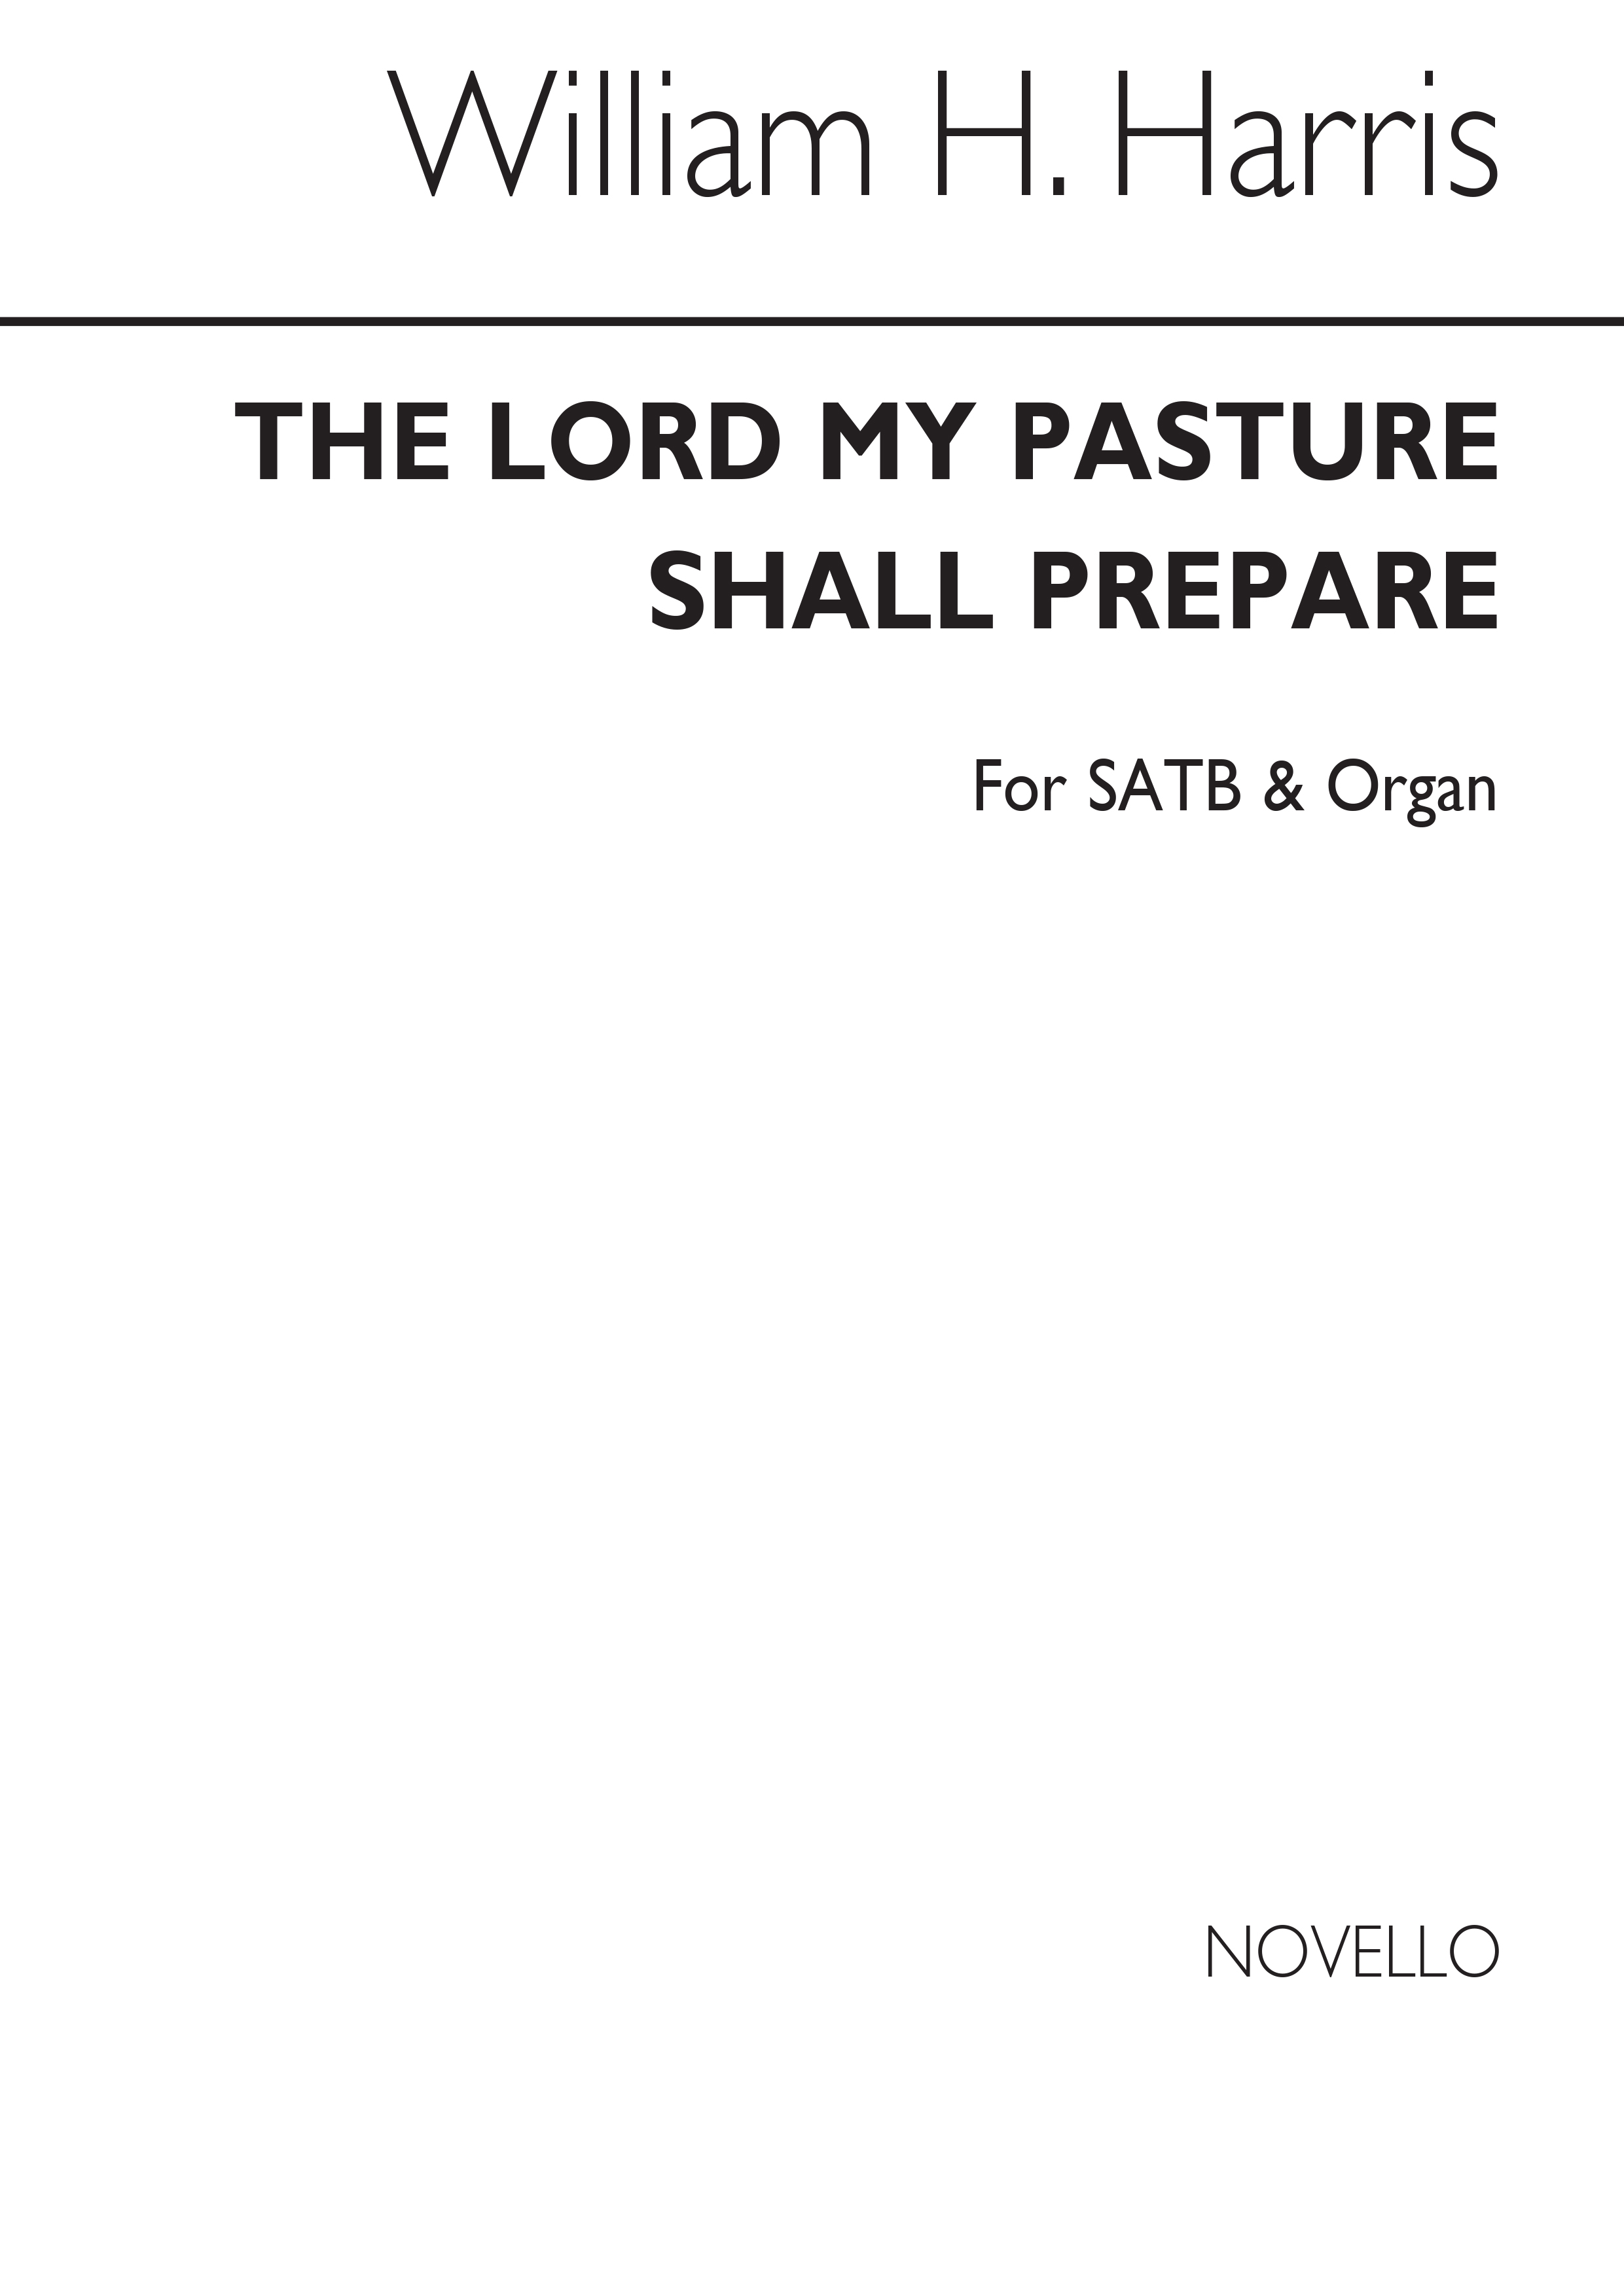 William H. Harris: Lord Pasture Shall Prepare (SATB/ORG)